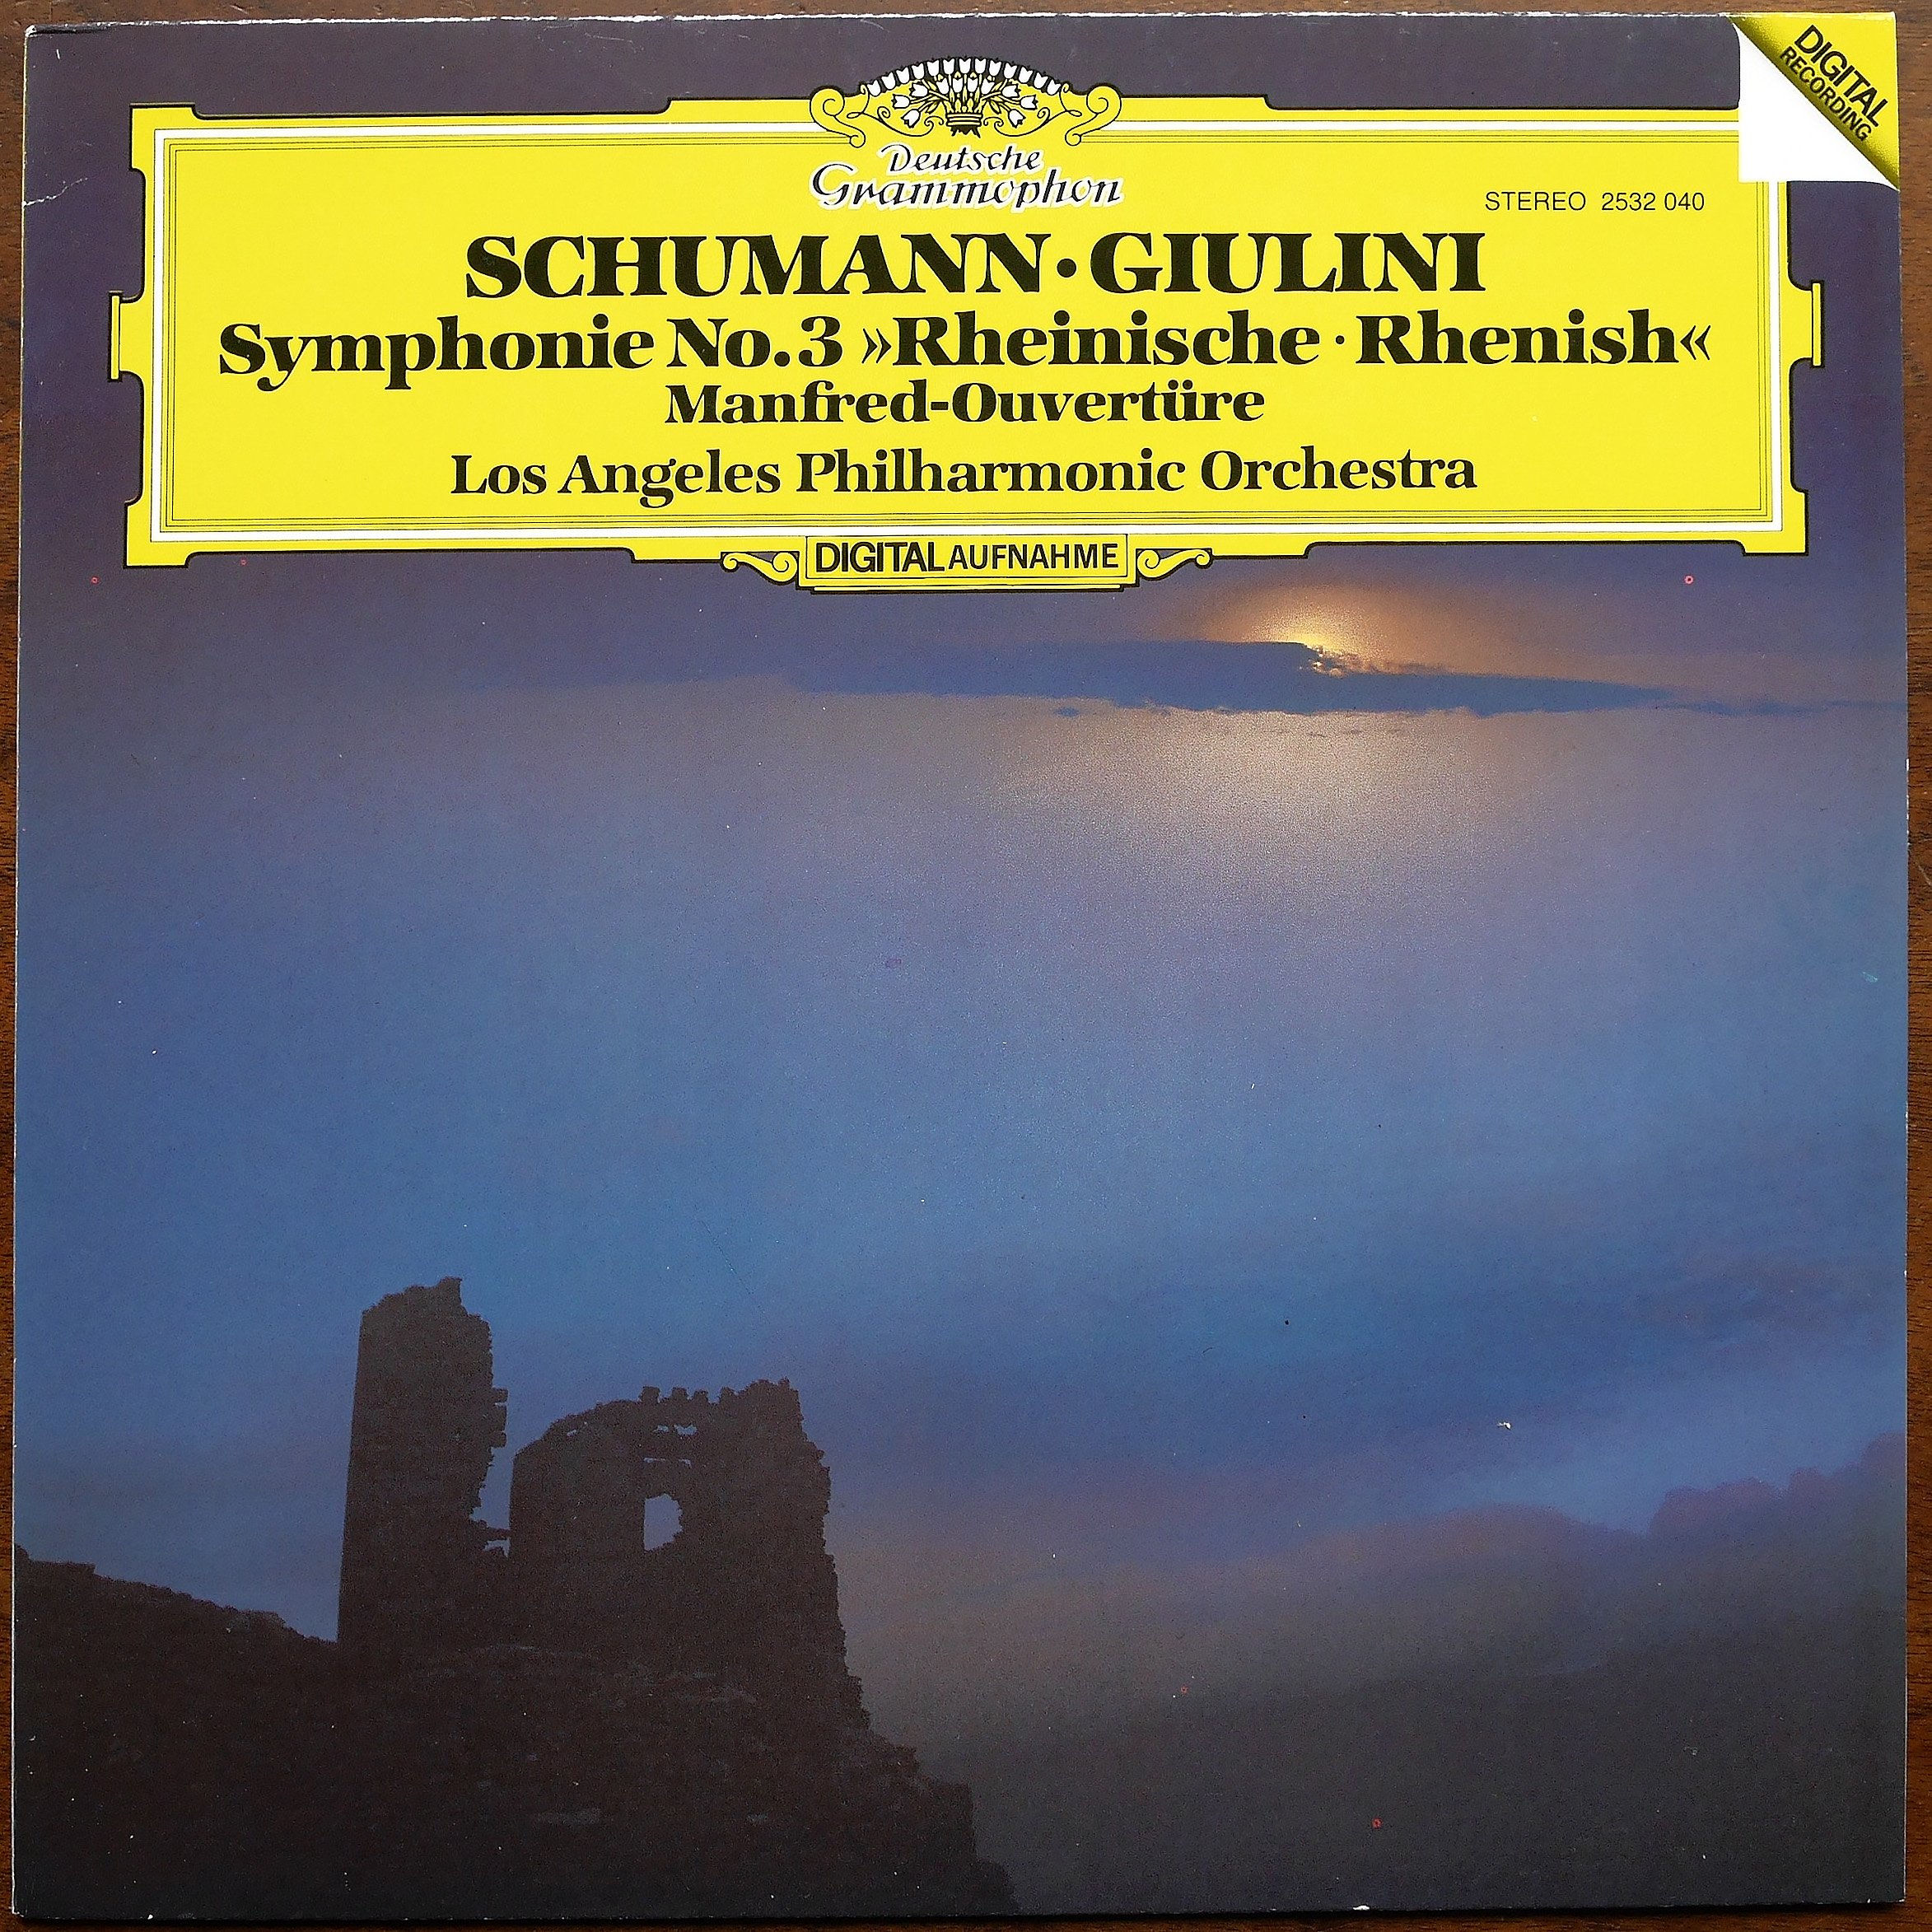 DGG 2532 040 Schumann Symphonie 3 Manfred Giulini DGG Digital Aufnahme